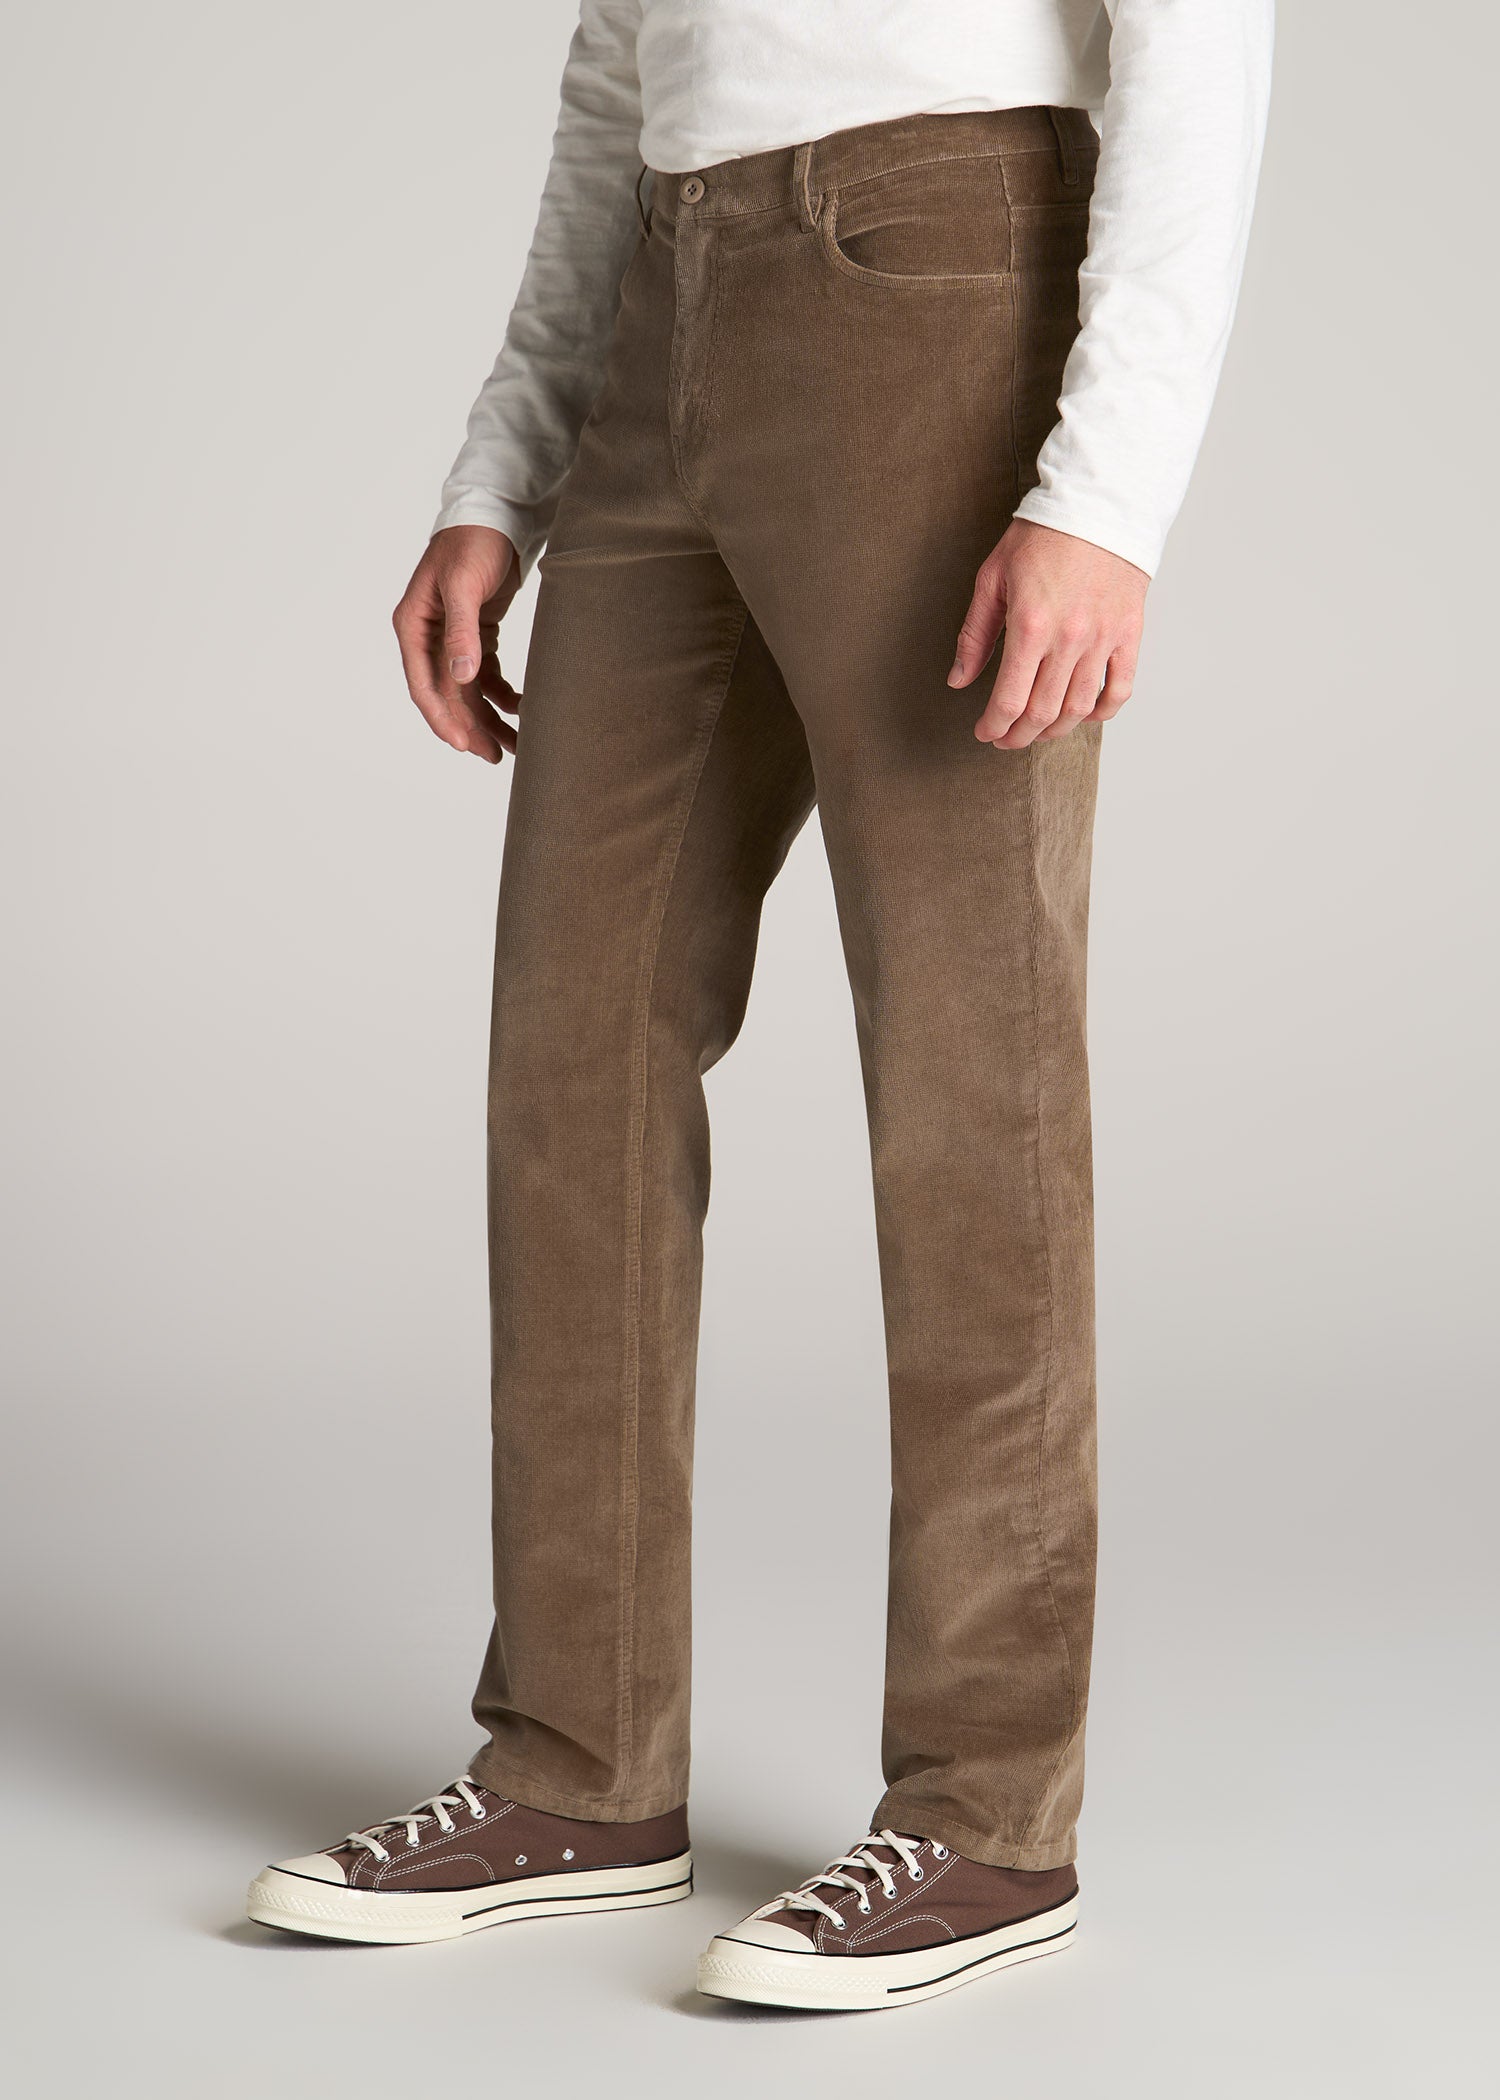 STRAIGHT-LEG Stretch Corduroy Pants for Tall Men in Dark Sand